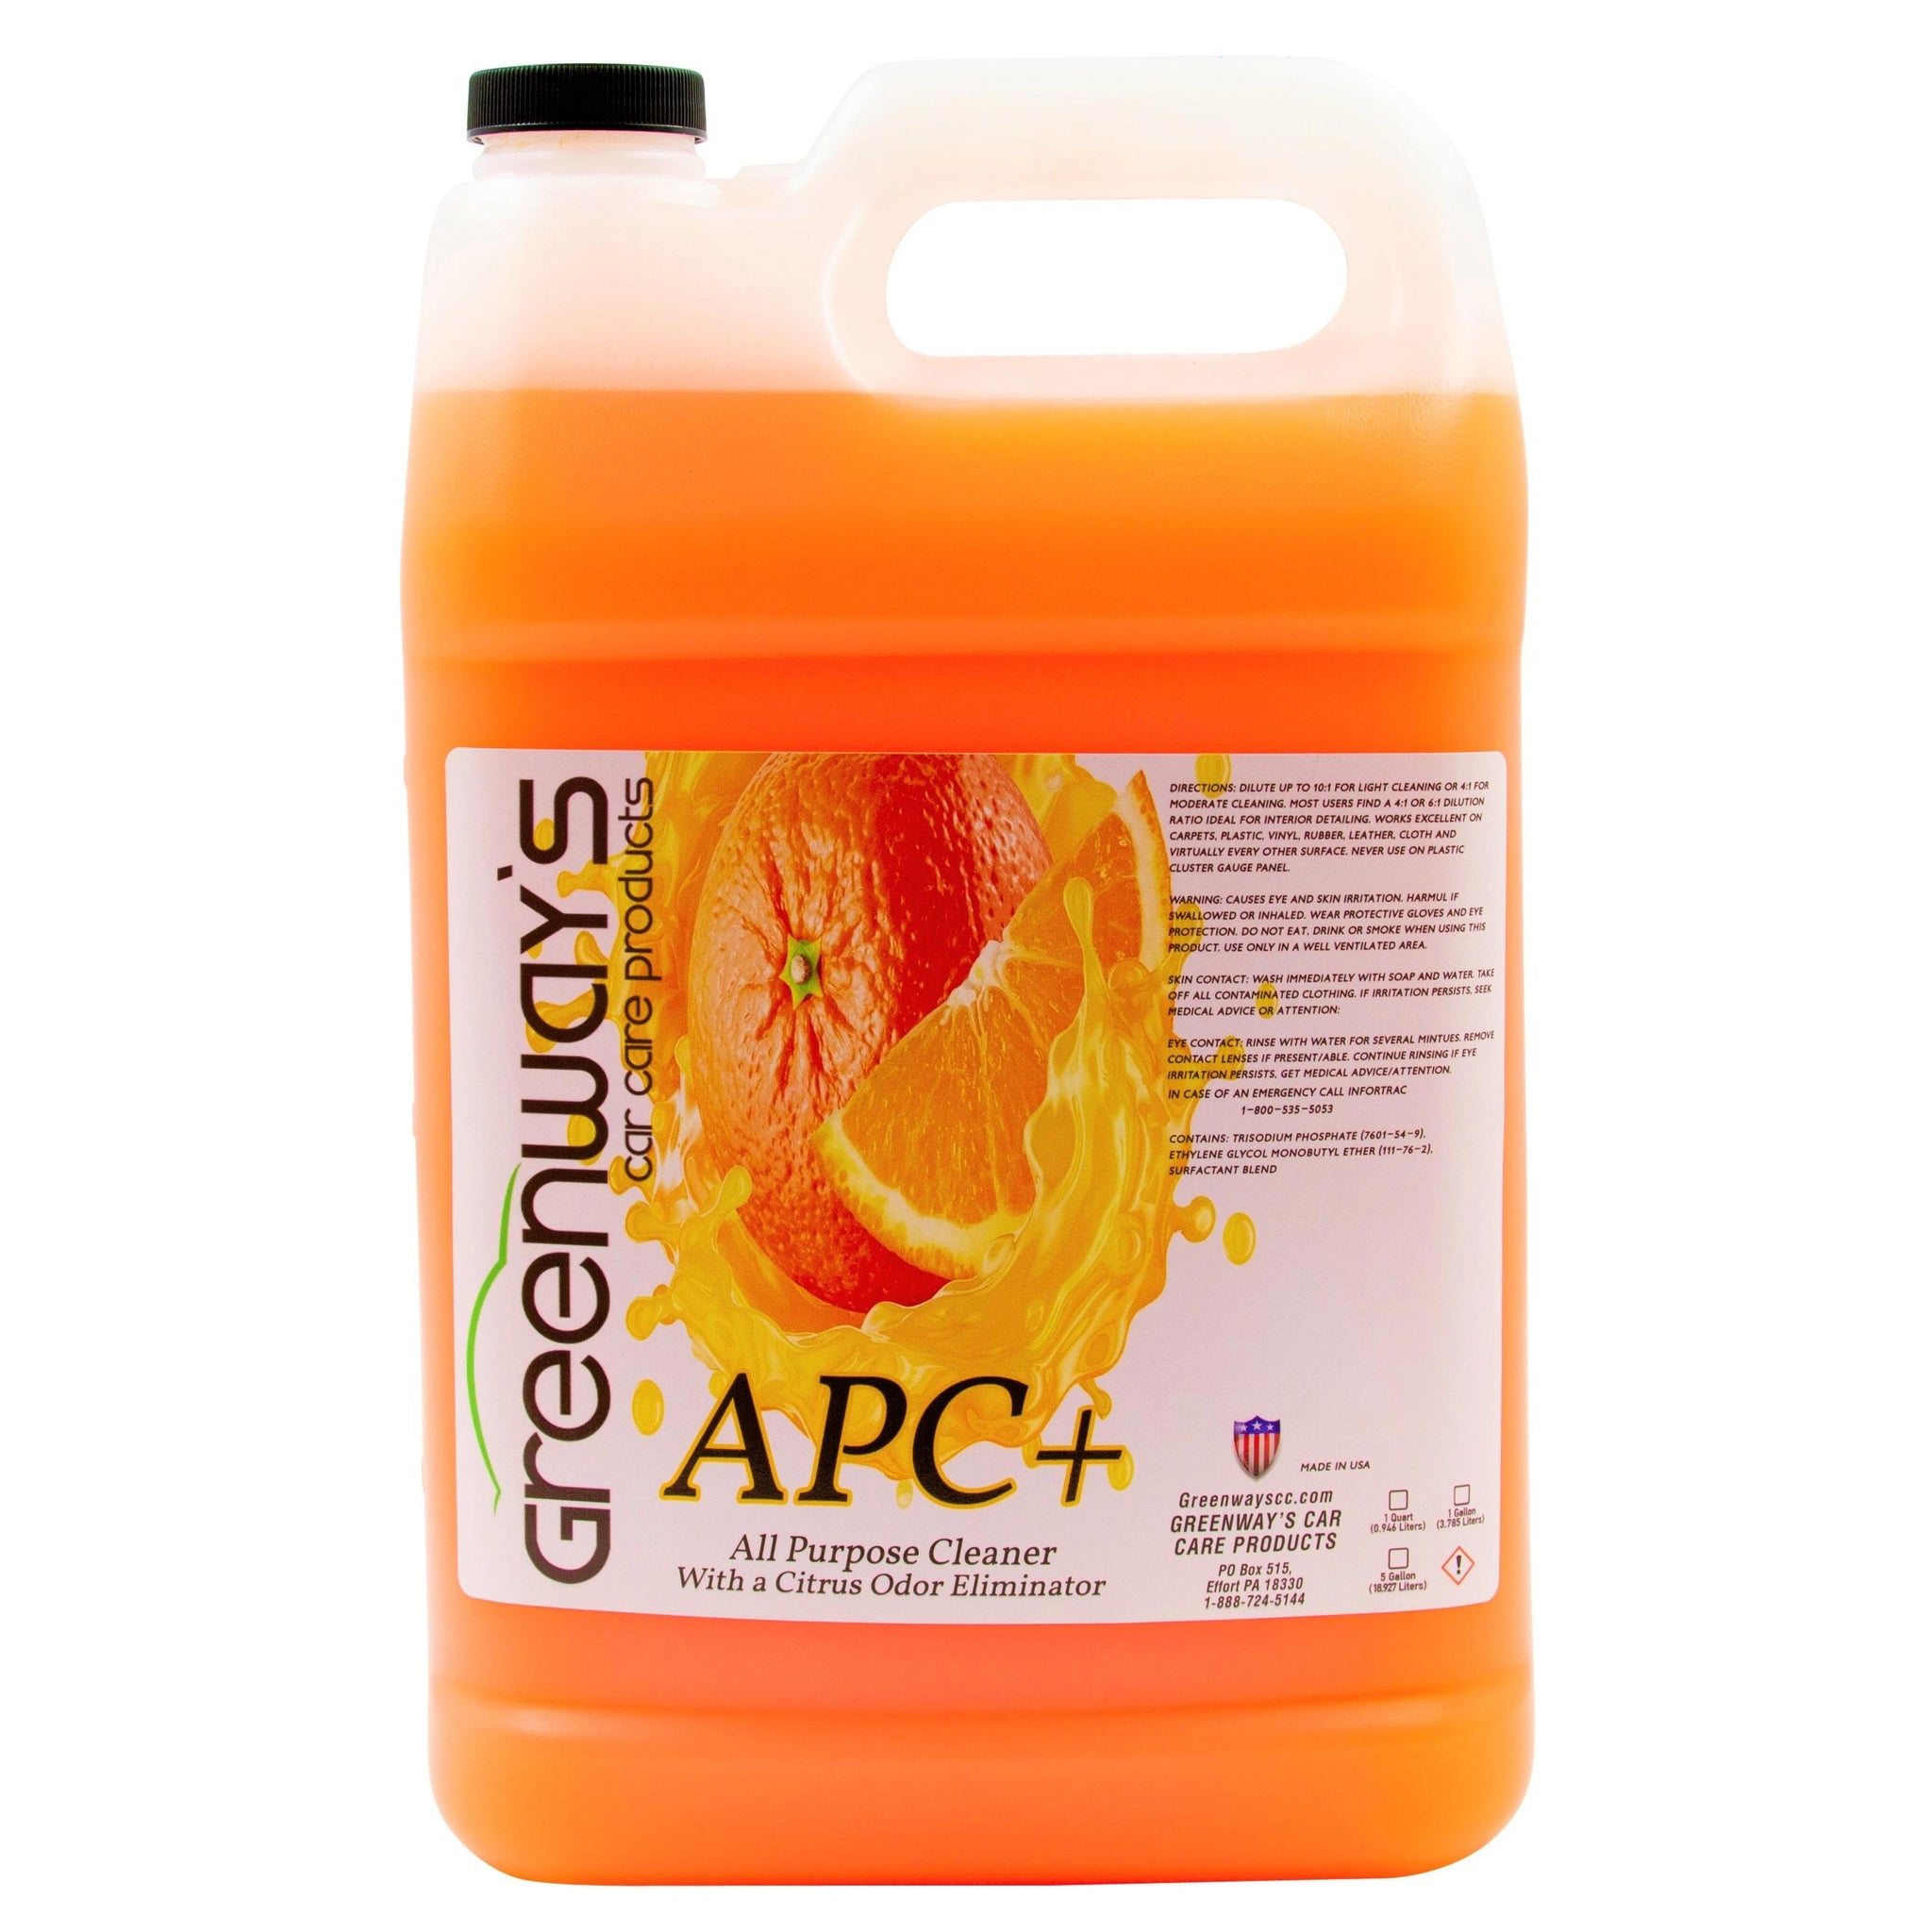 APC+, butyl-free all-purpose car interior cleaner with an odor eliminator, citrus-scented, 1 gallon.